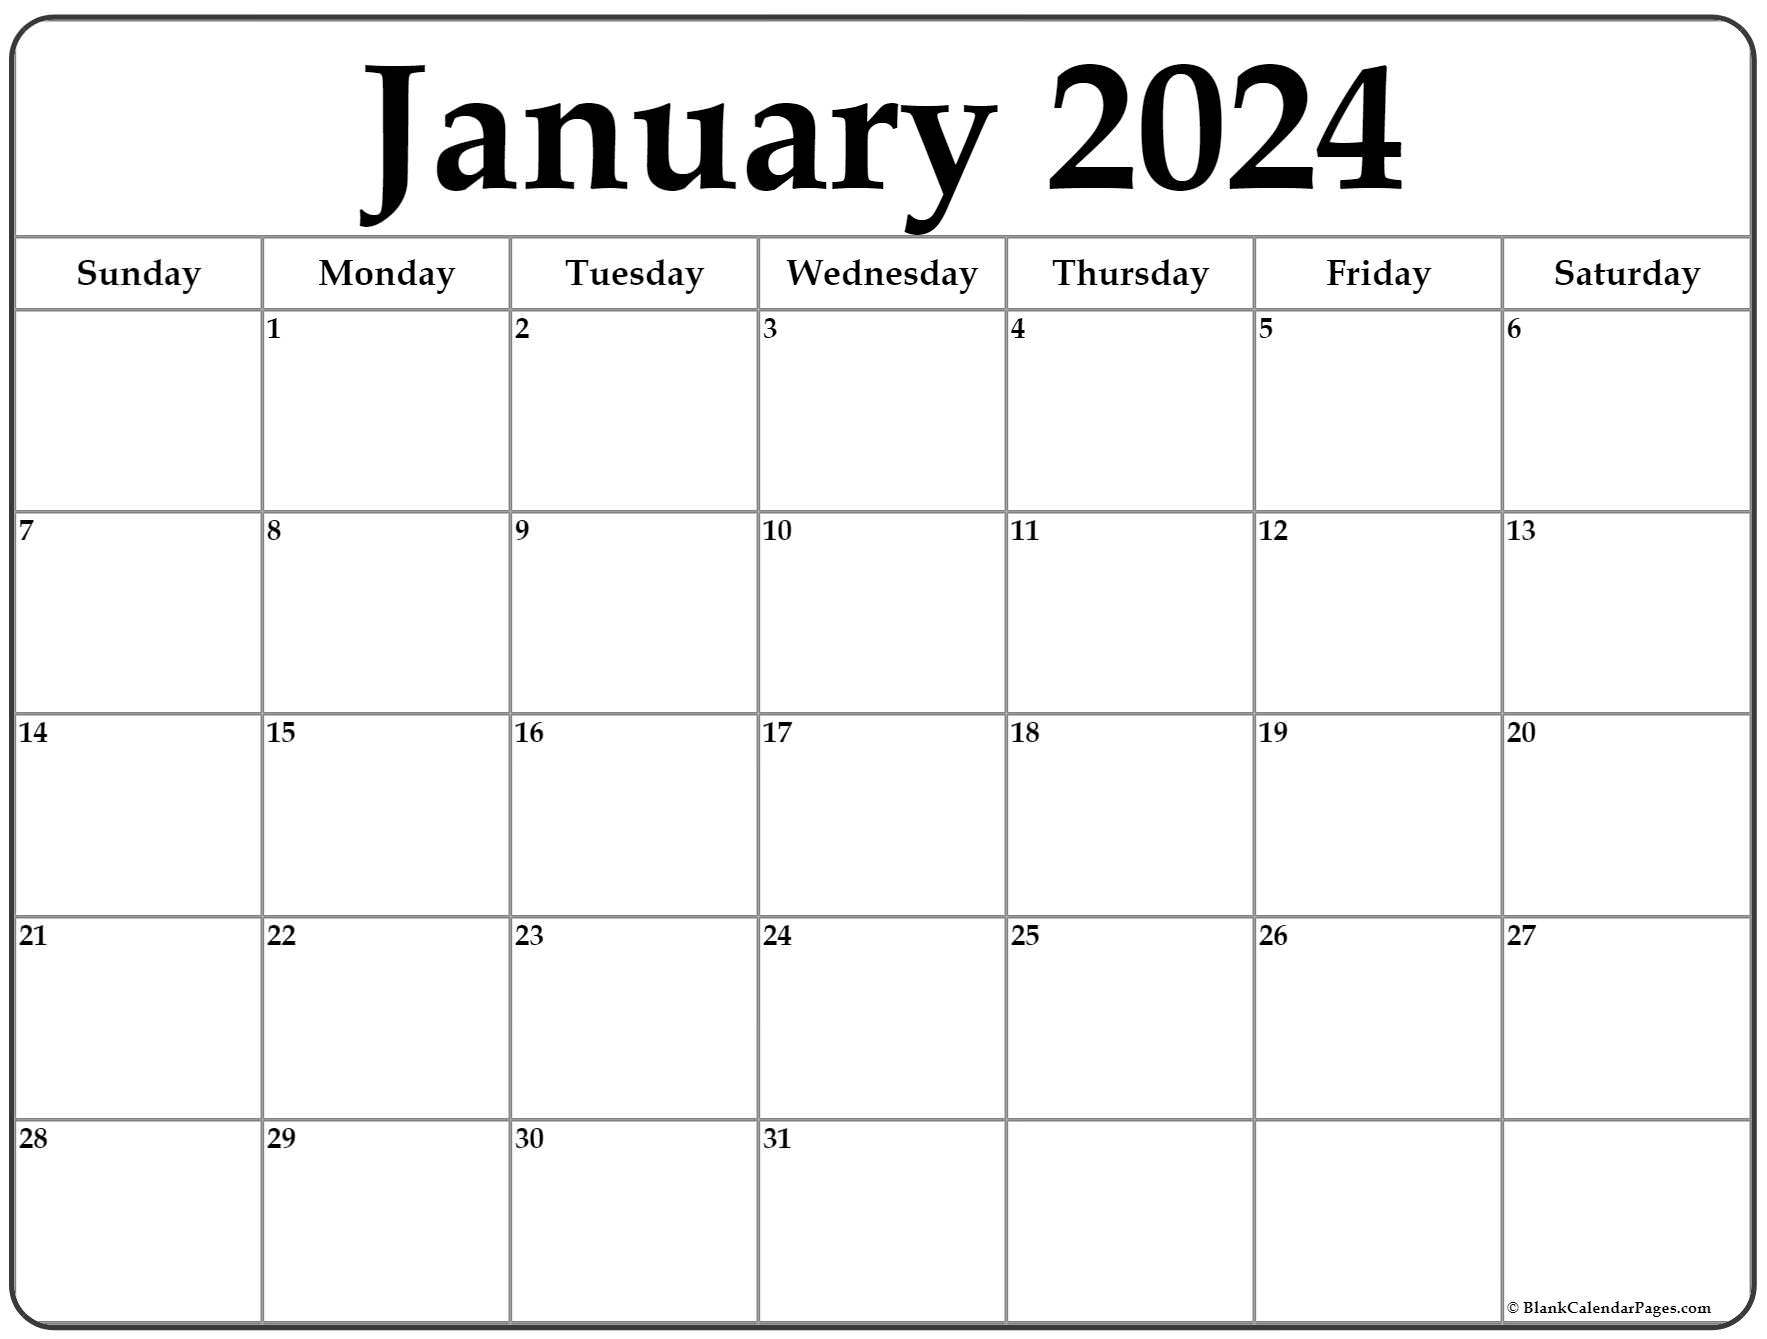 January 2024 Calendar | Free Printable Calendar for 2024 Monthly Calendar Template Printable Free